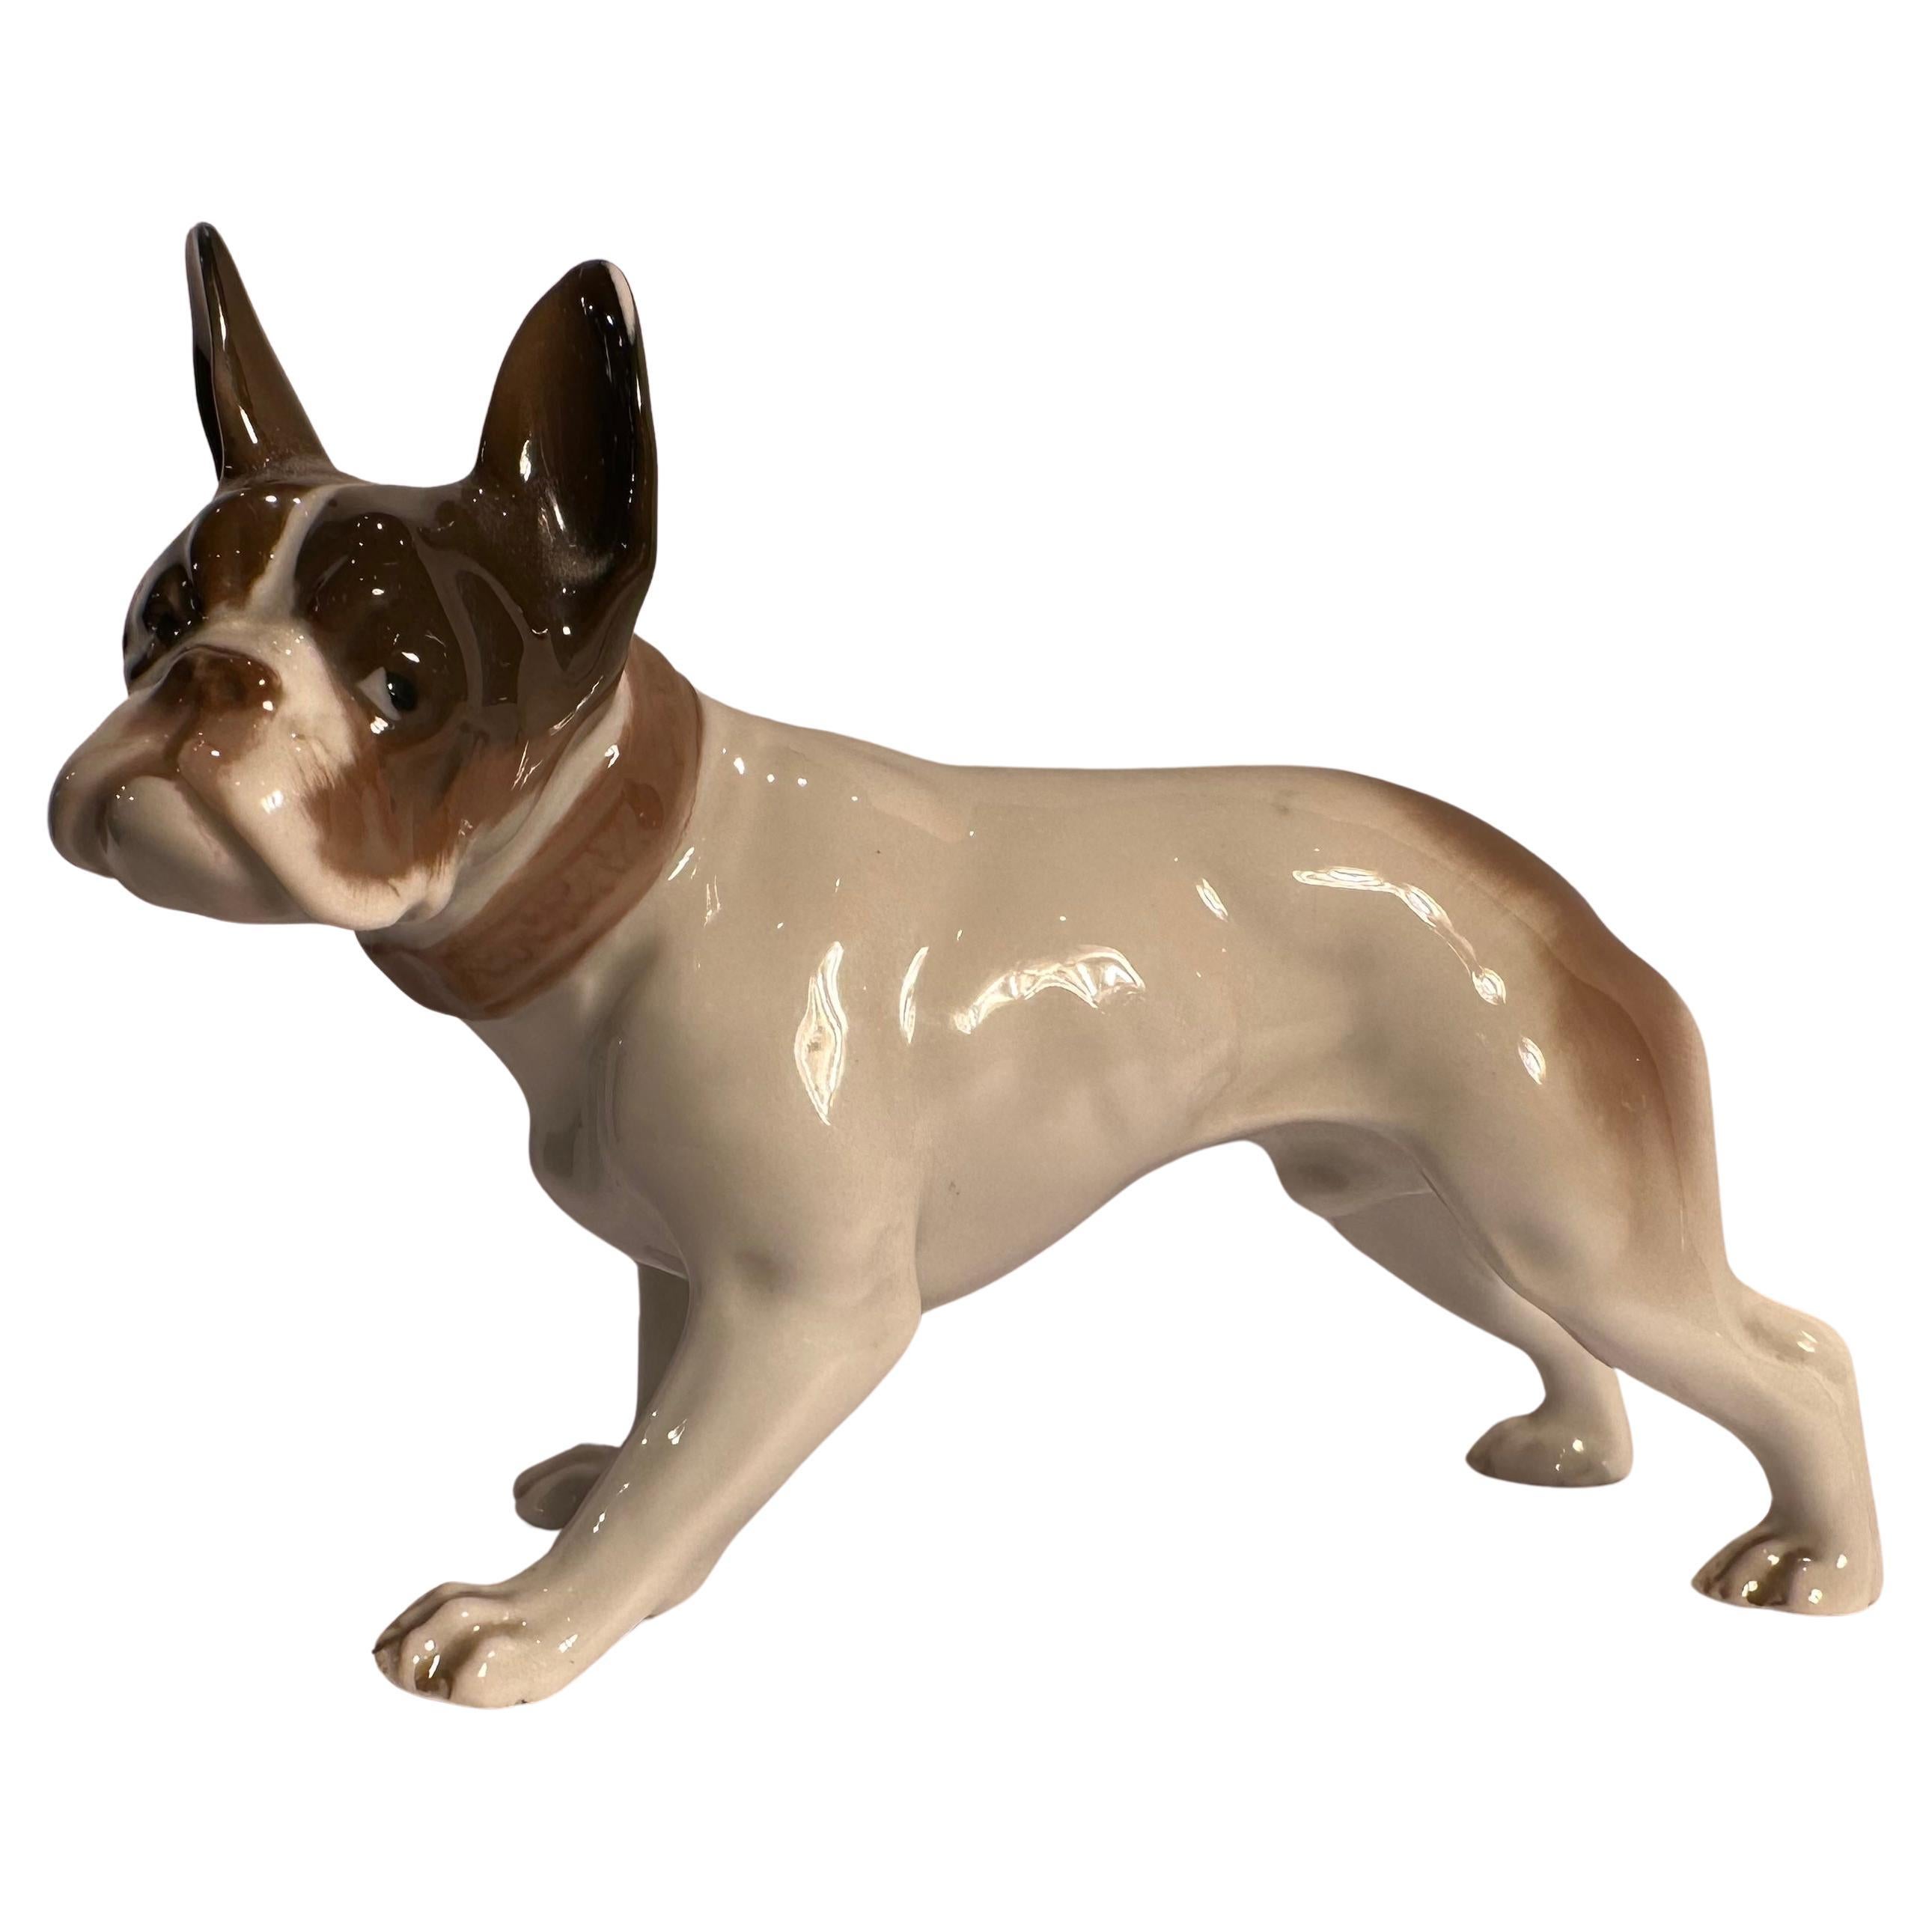 Finest Quality Rosenthal Germany French Bulldog Porcelain Dog Figurine